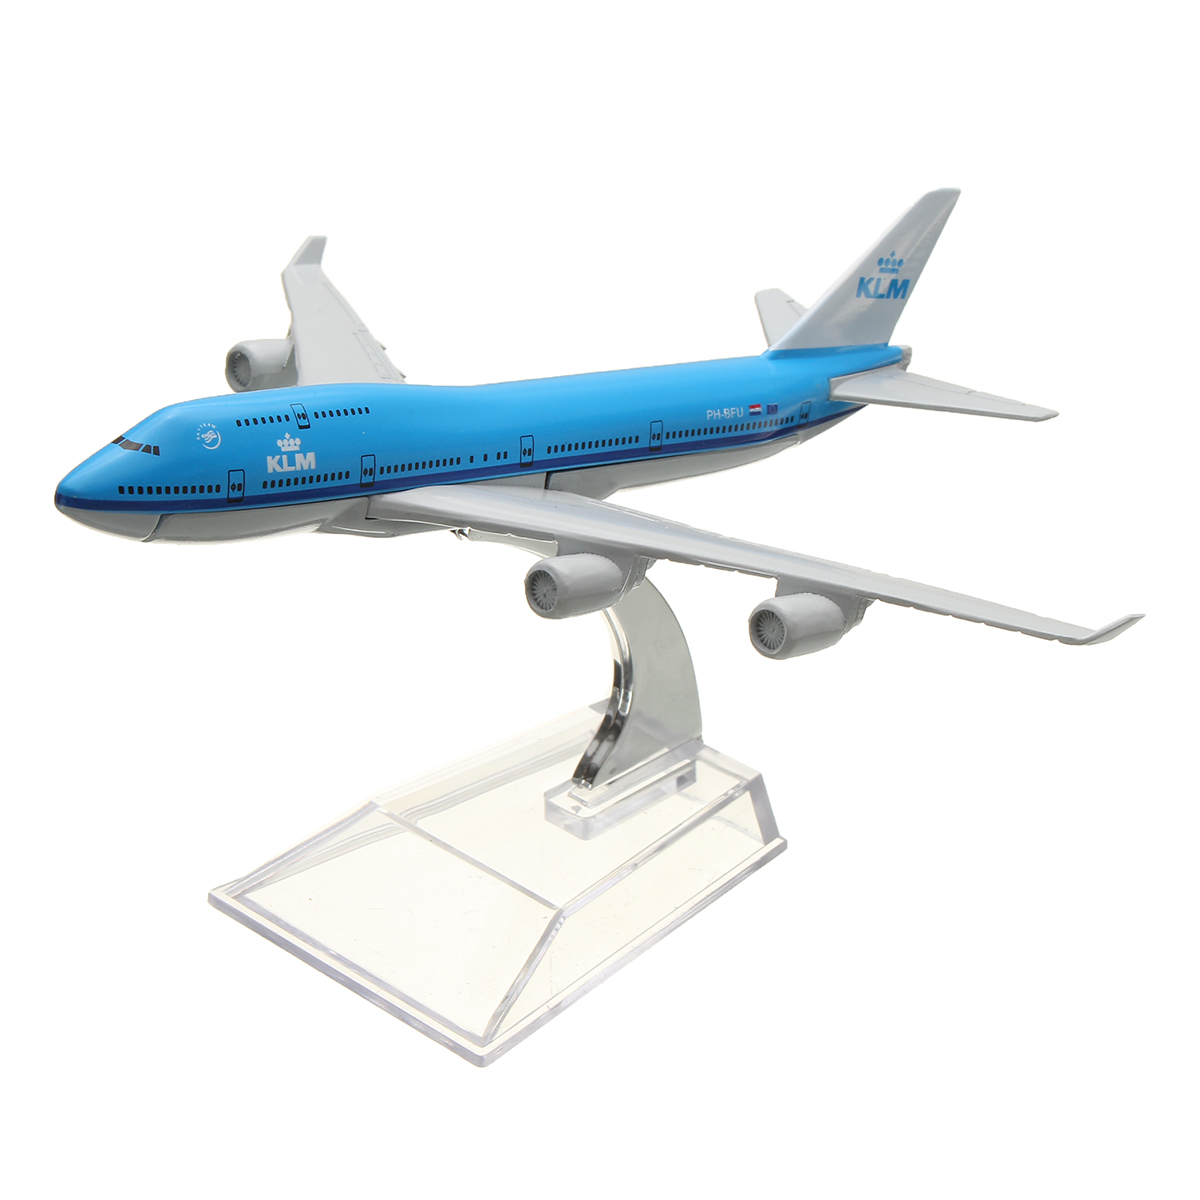 NEW-16cm-Airplane-Metal-Plane-Model-Aircraft-B747-KLM-Aeroplane-Scale-Airplane-Desk-Toy-1102722-1